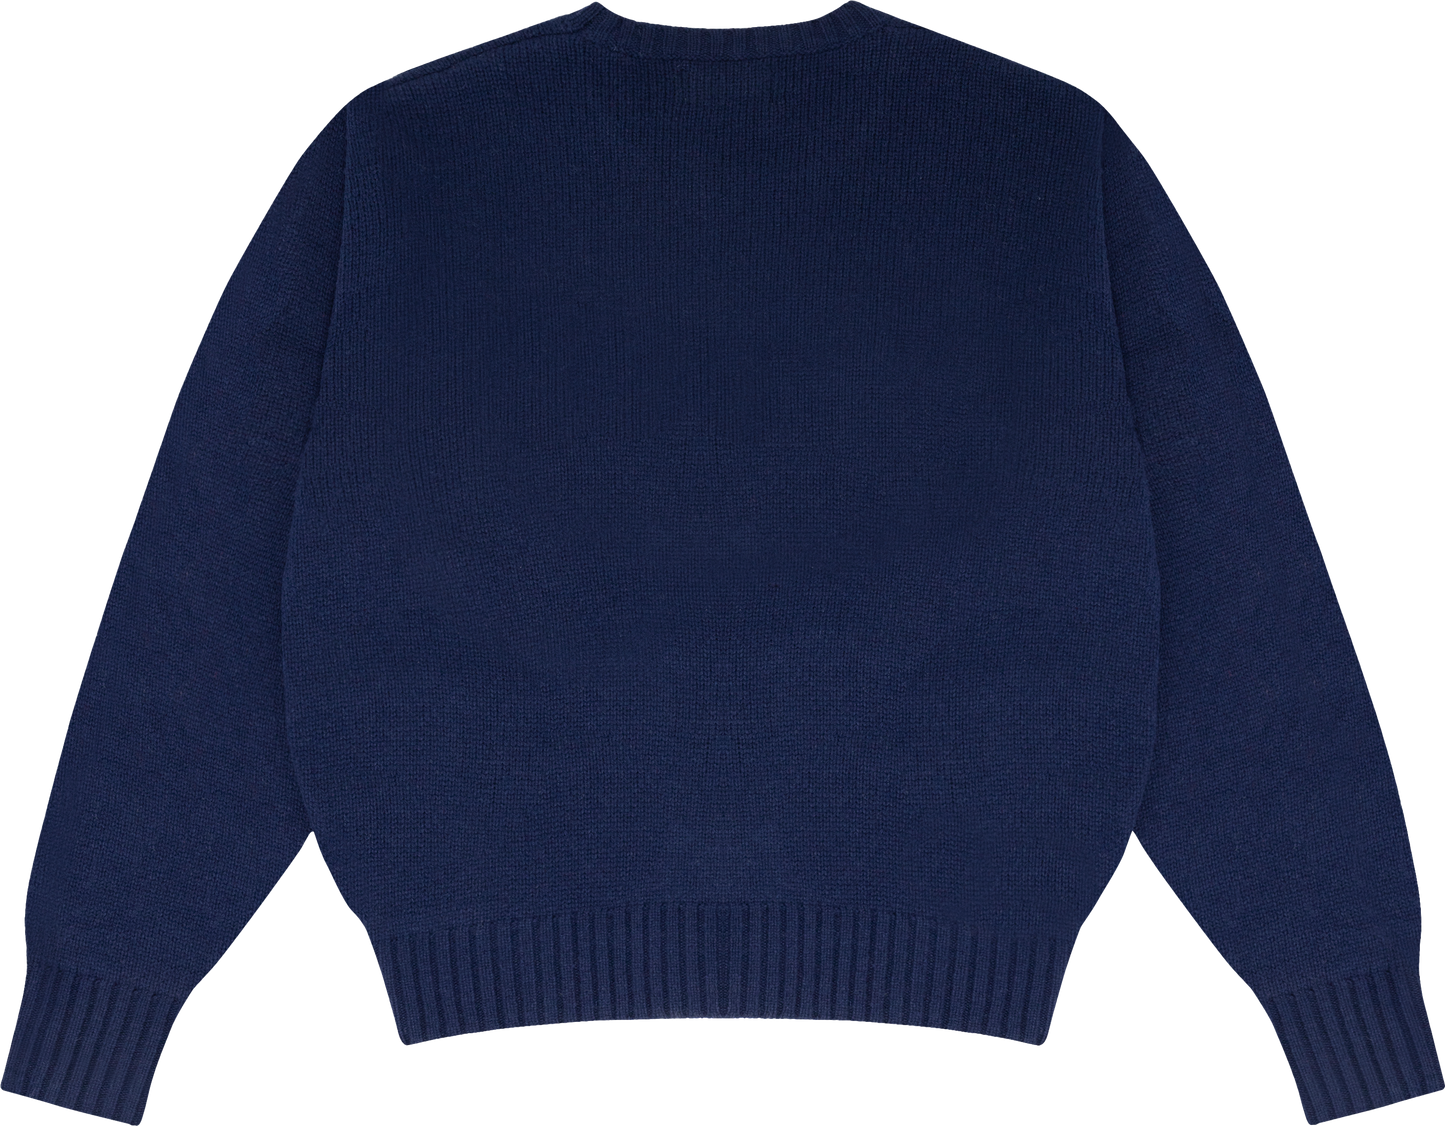 'Tyson Beckford Sweater' NAVY